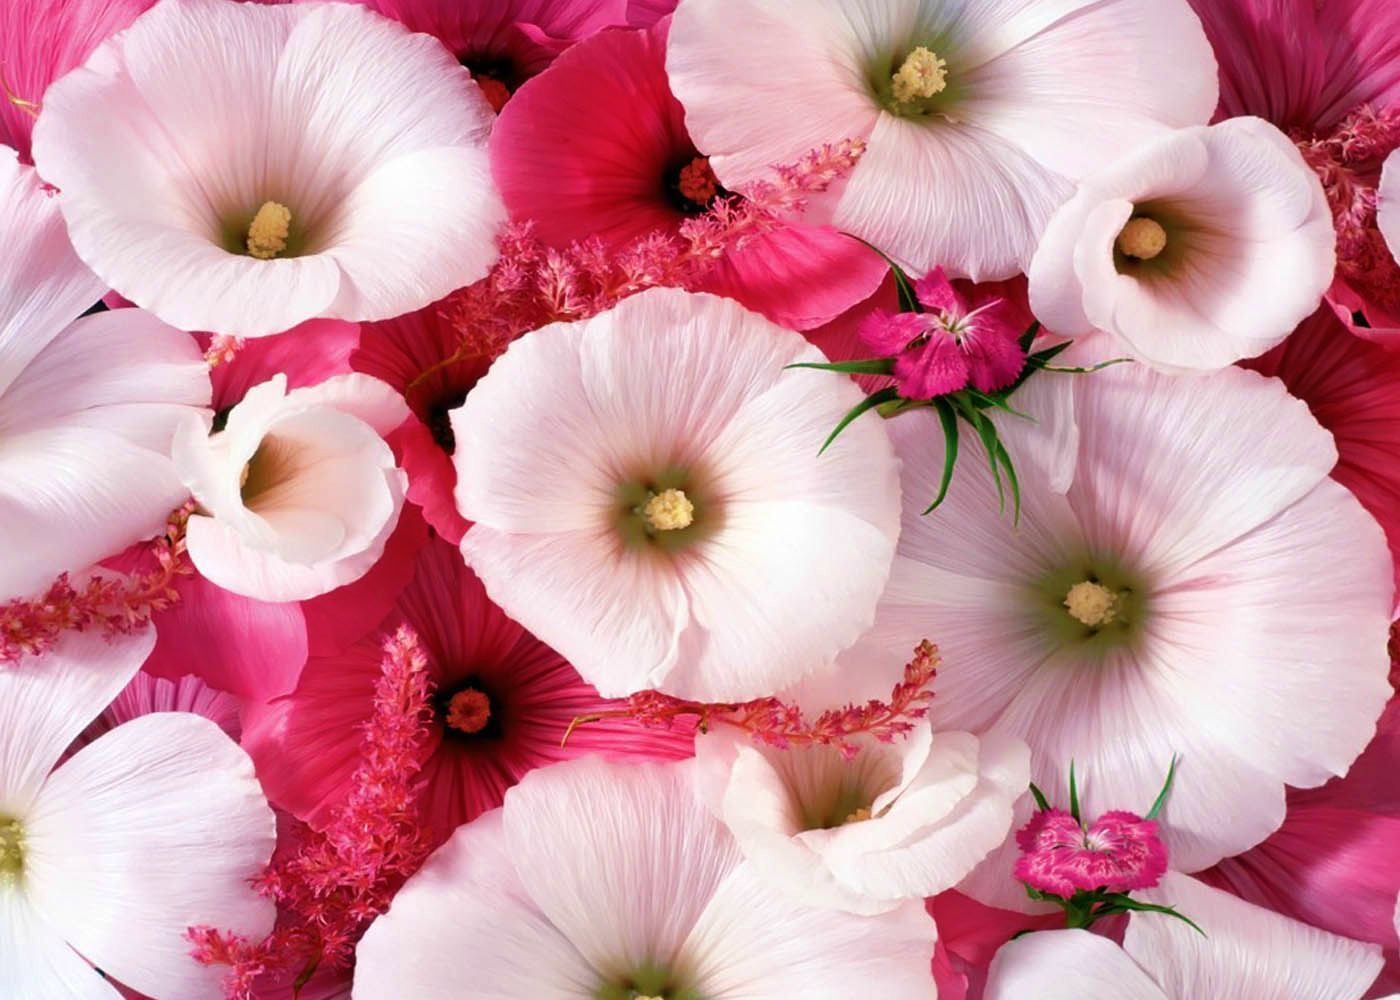 World's Most Beautiful Flowers Wallpaper Free World's Most Beautiful Flowers Background